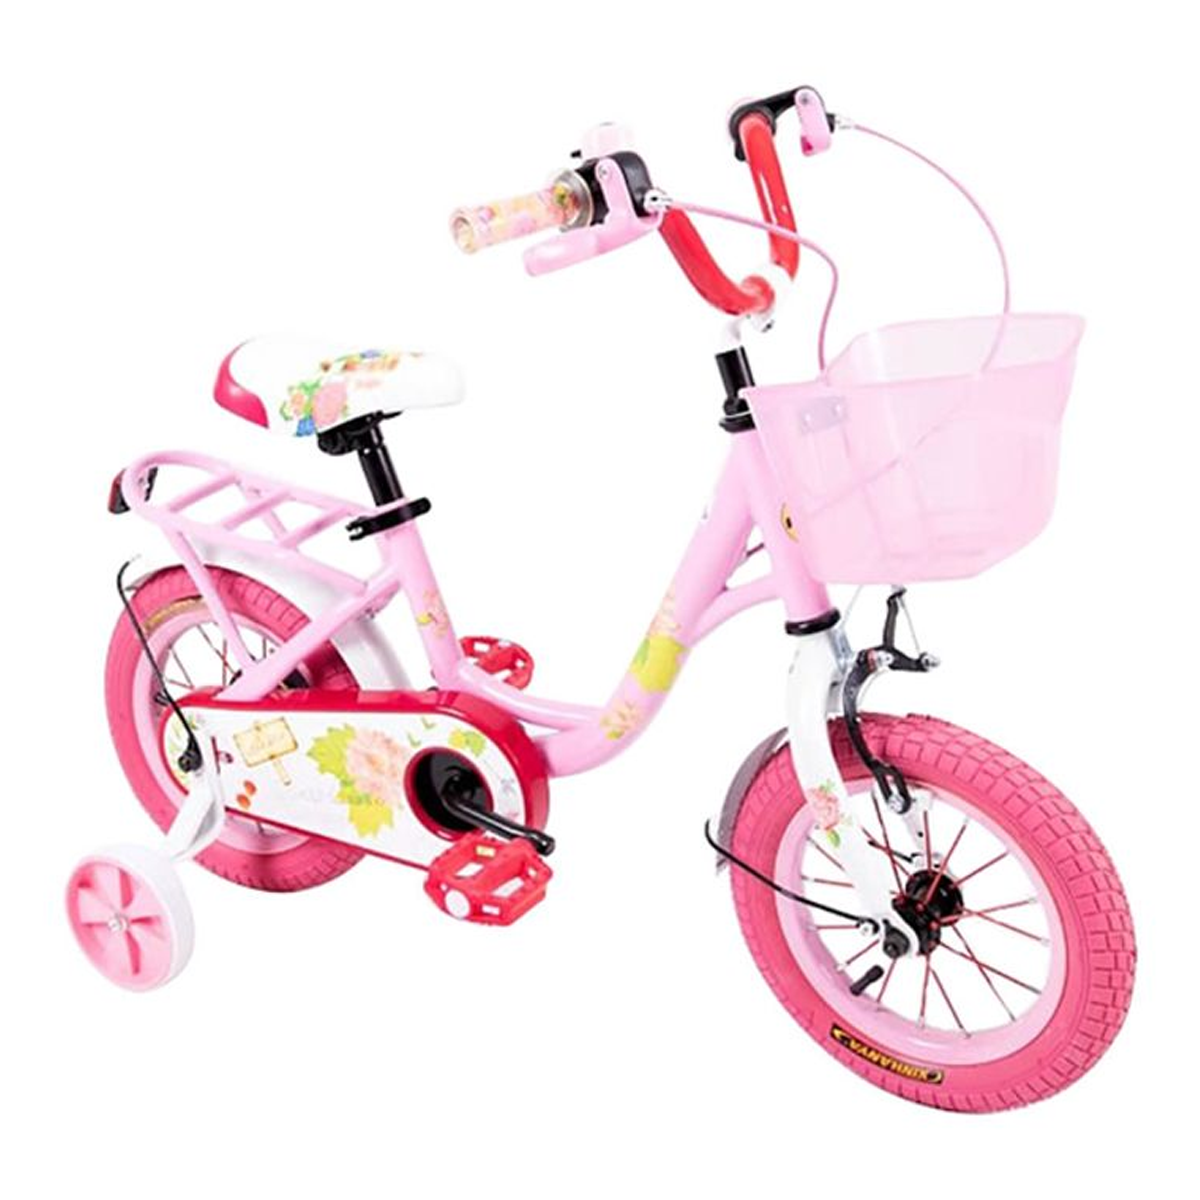 DESERT STAR Wheels Kids Bicycle 12 inch